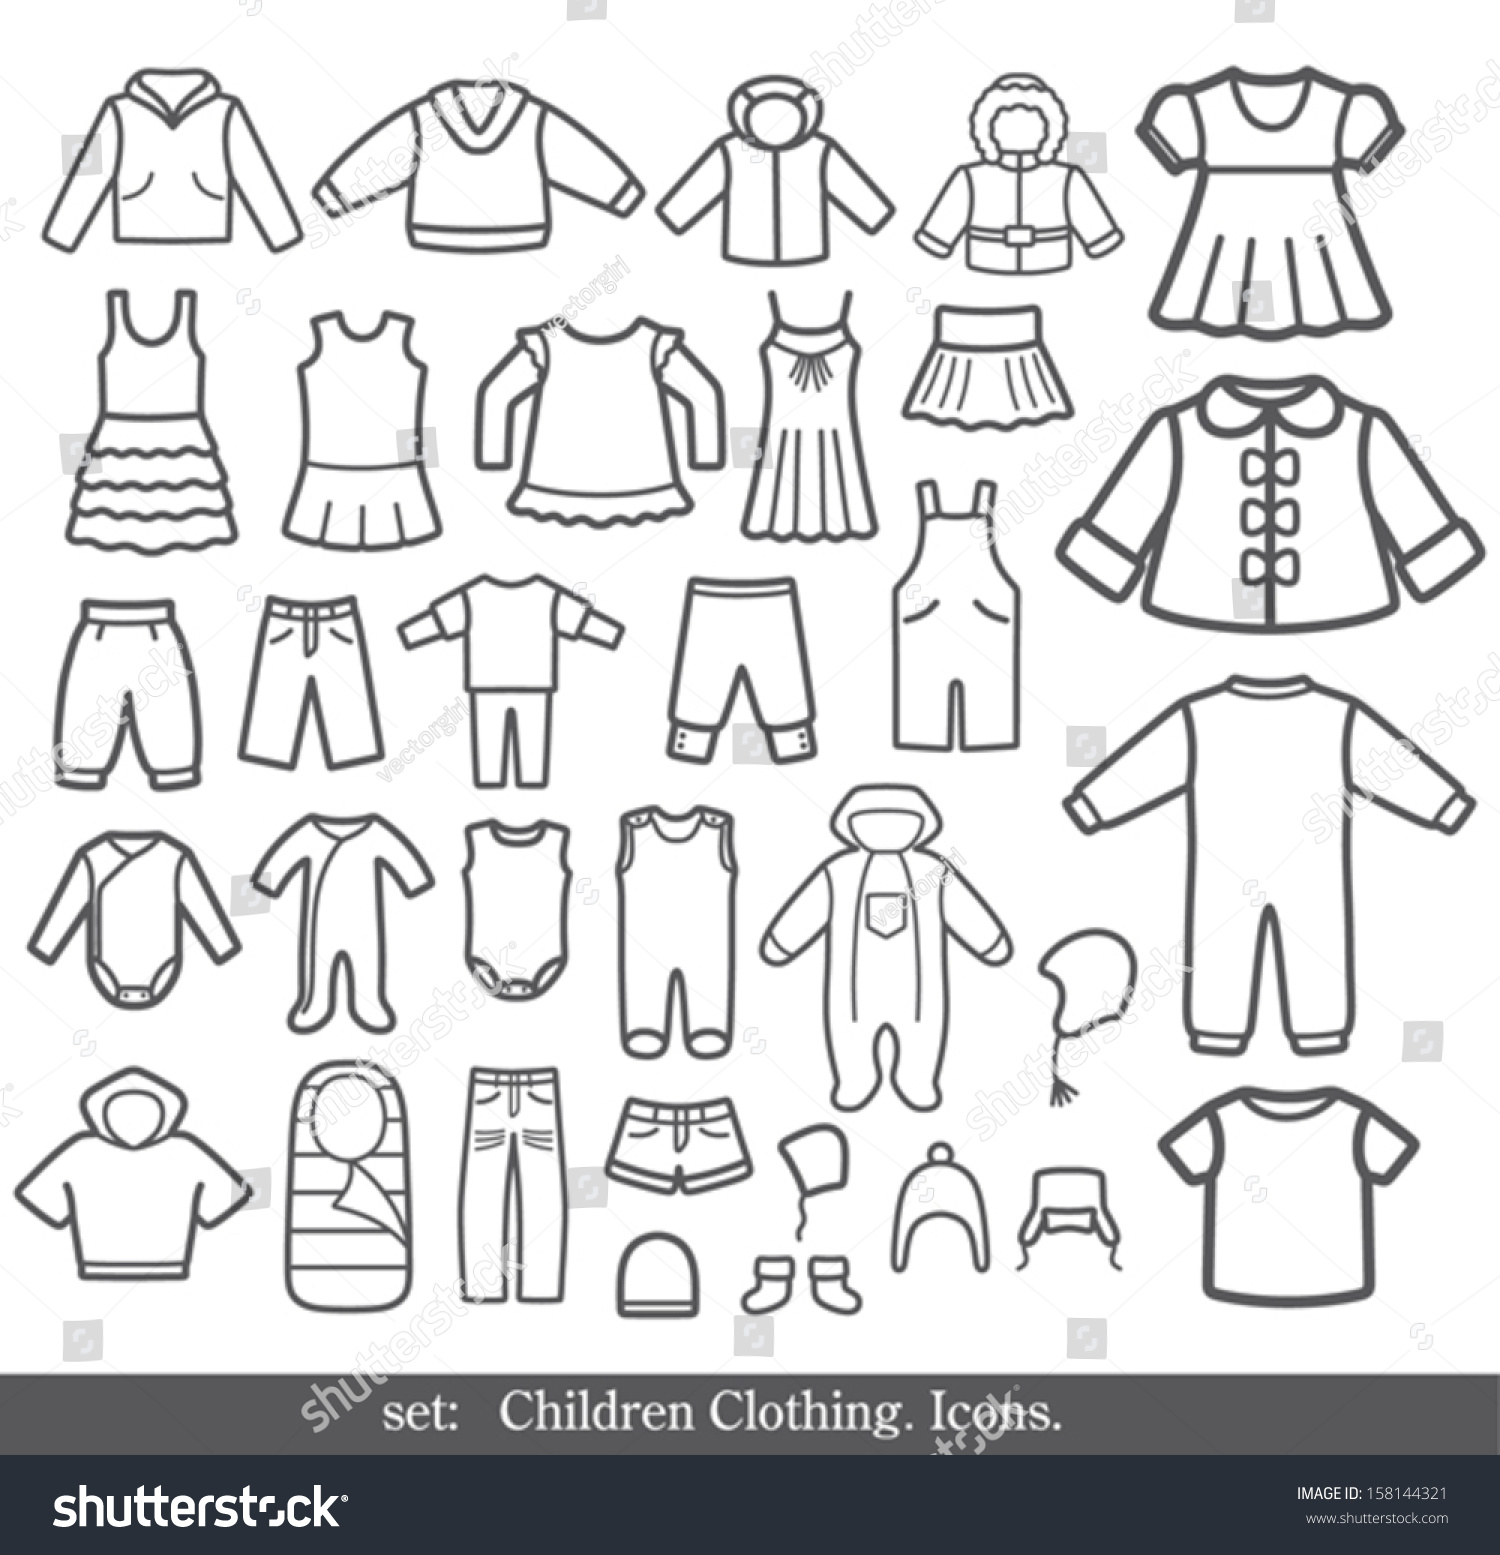 Set Of Children Clothing. Vector Icons. - 158144321 : Shutterstock